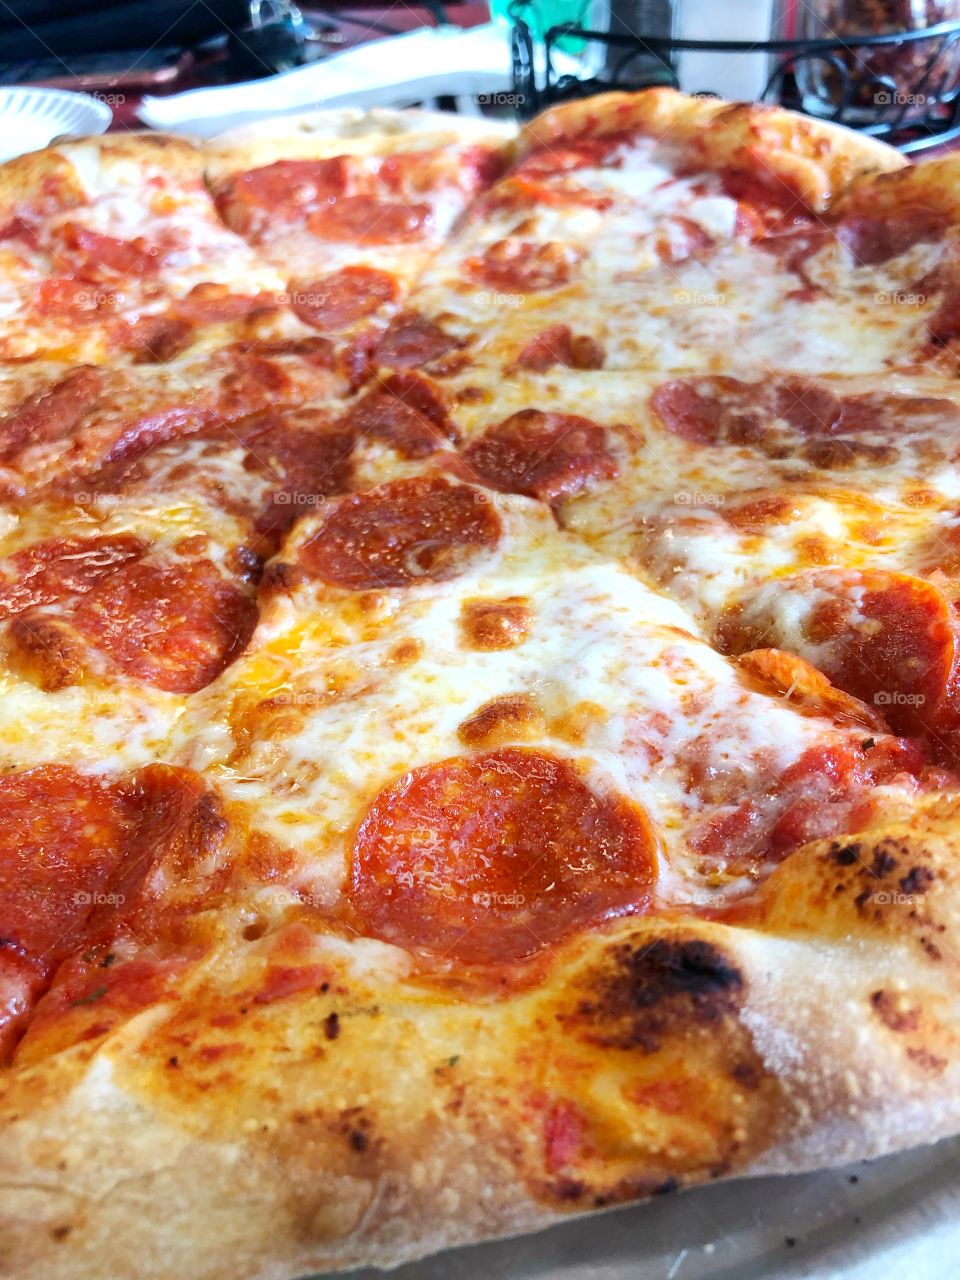 Delicious slices. Pepperoni pizza!